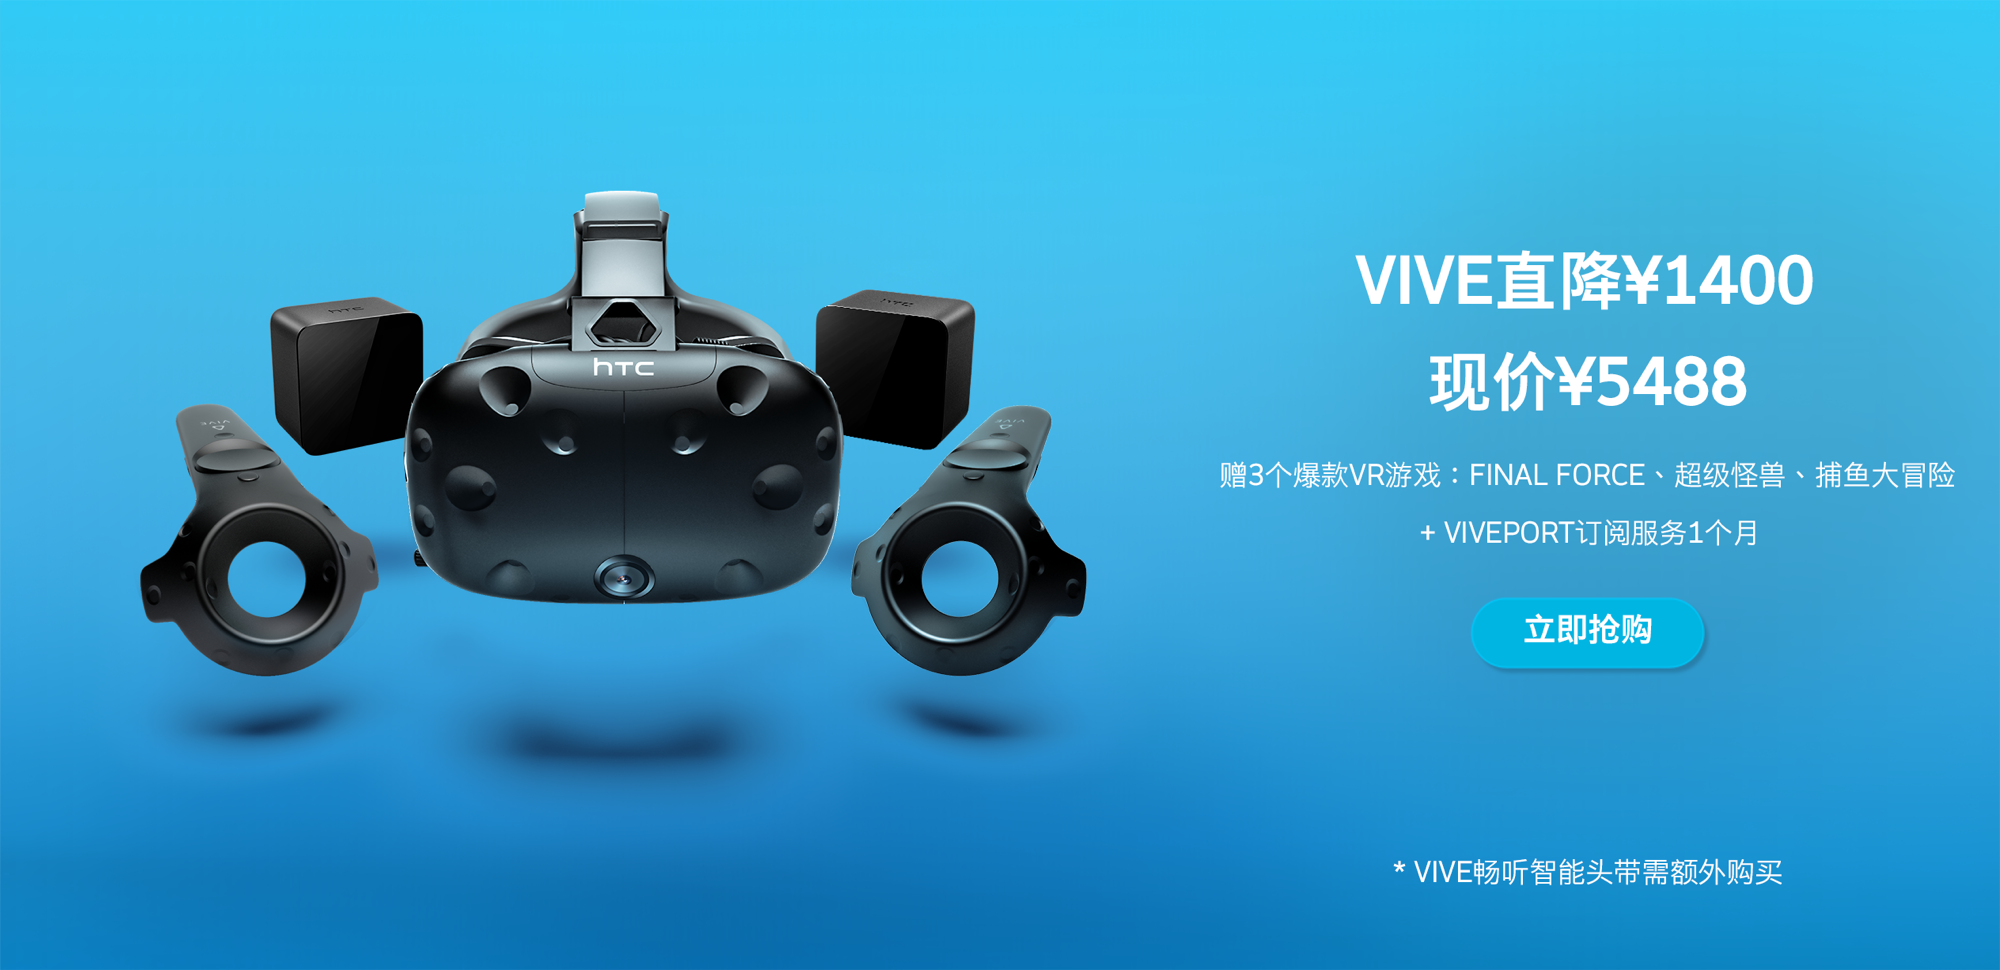 VIVE公布全新售价，VR玩家终于如愿以偿了！ | VIVE Blog